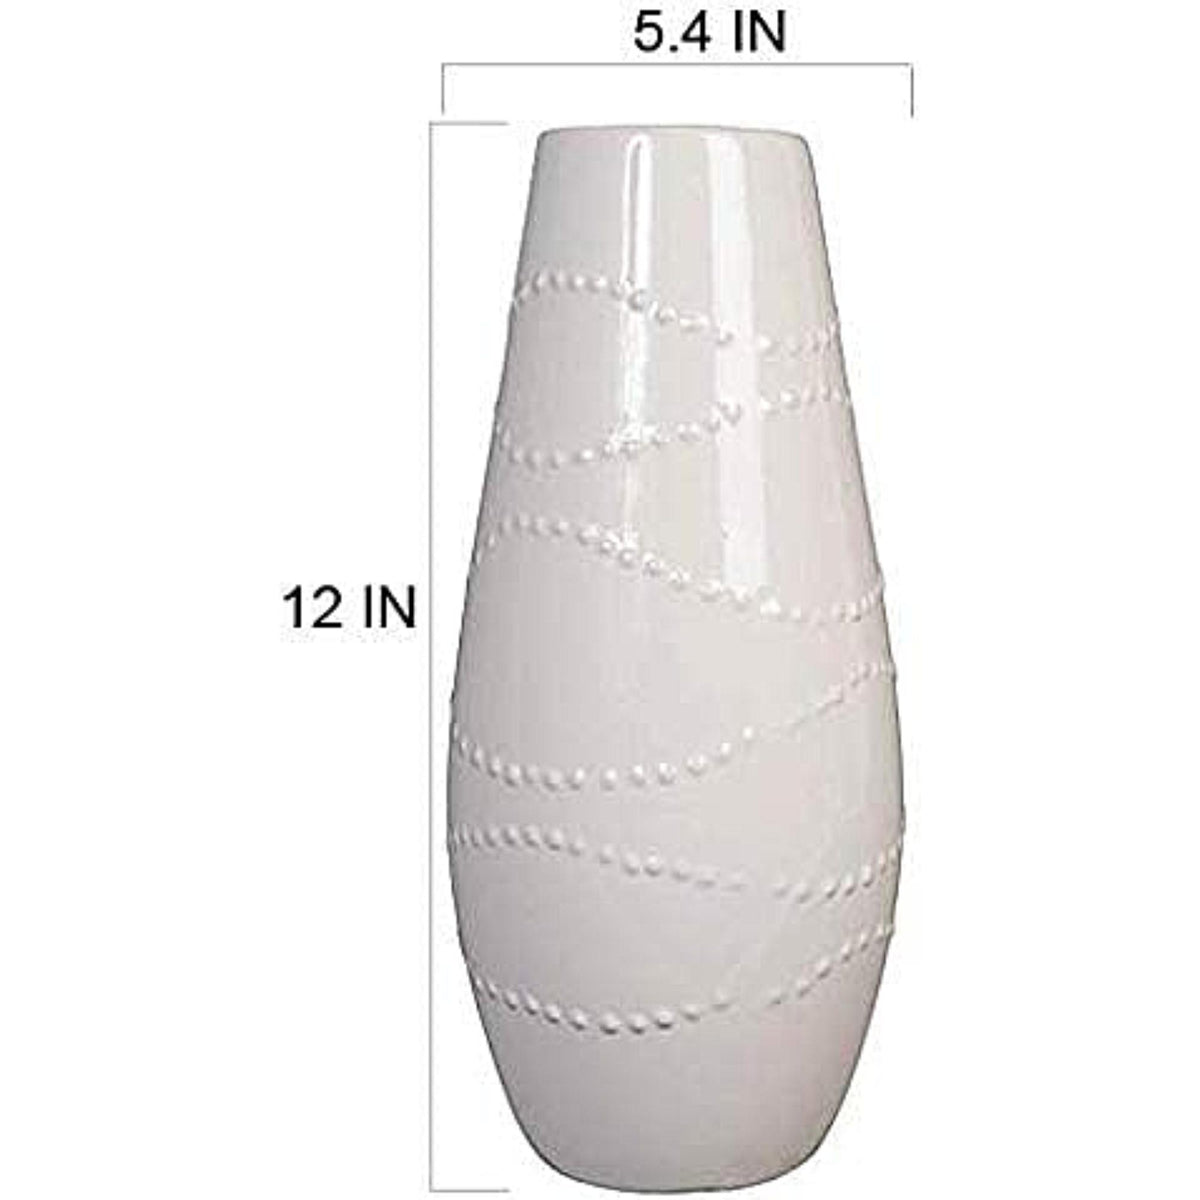 HOSLEY® Ceramic Textured Vase, White Glazed, 12 Inches High